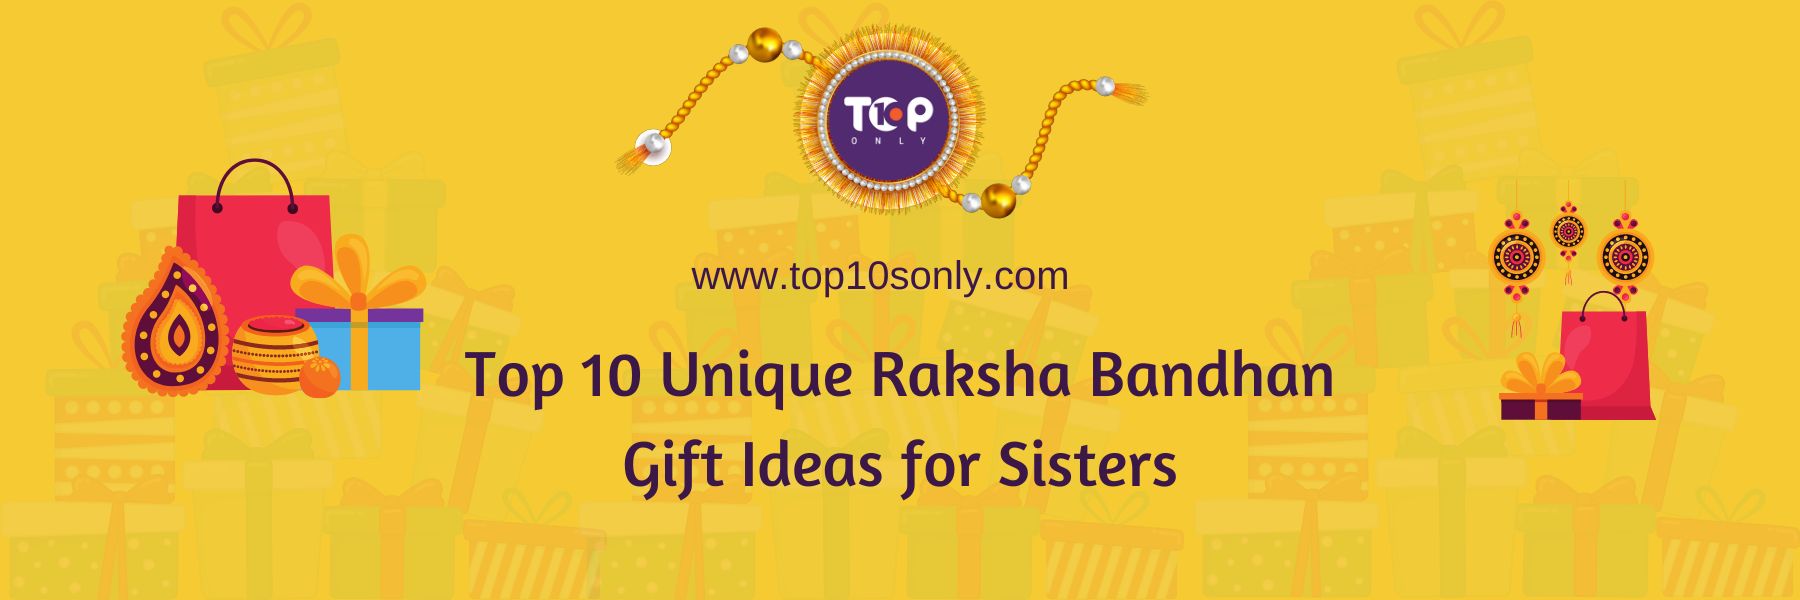 top 10 unique raksha bandhan gift ideas for sisters (1800x600)